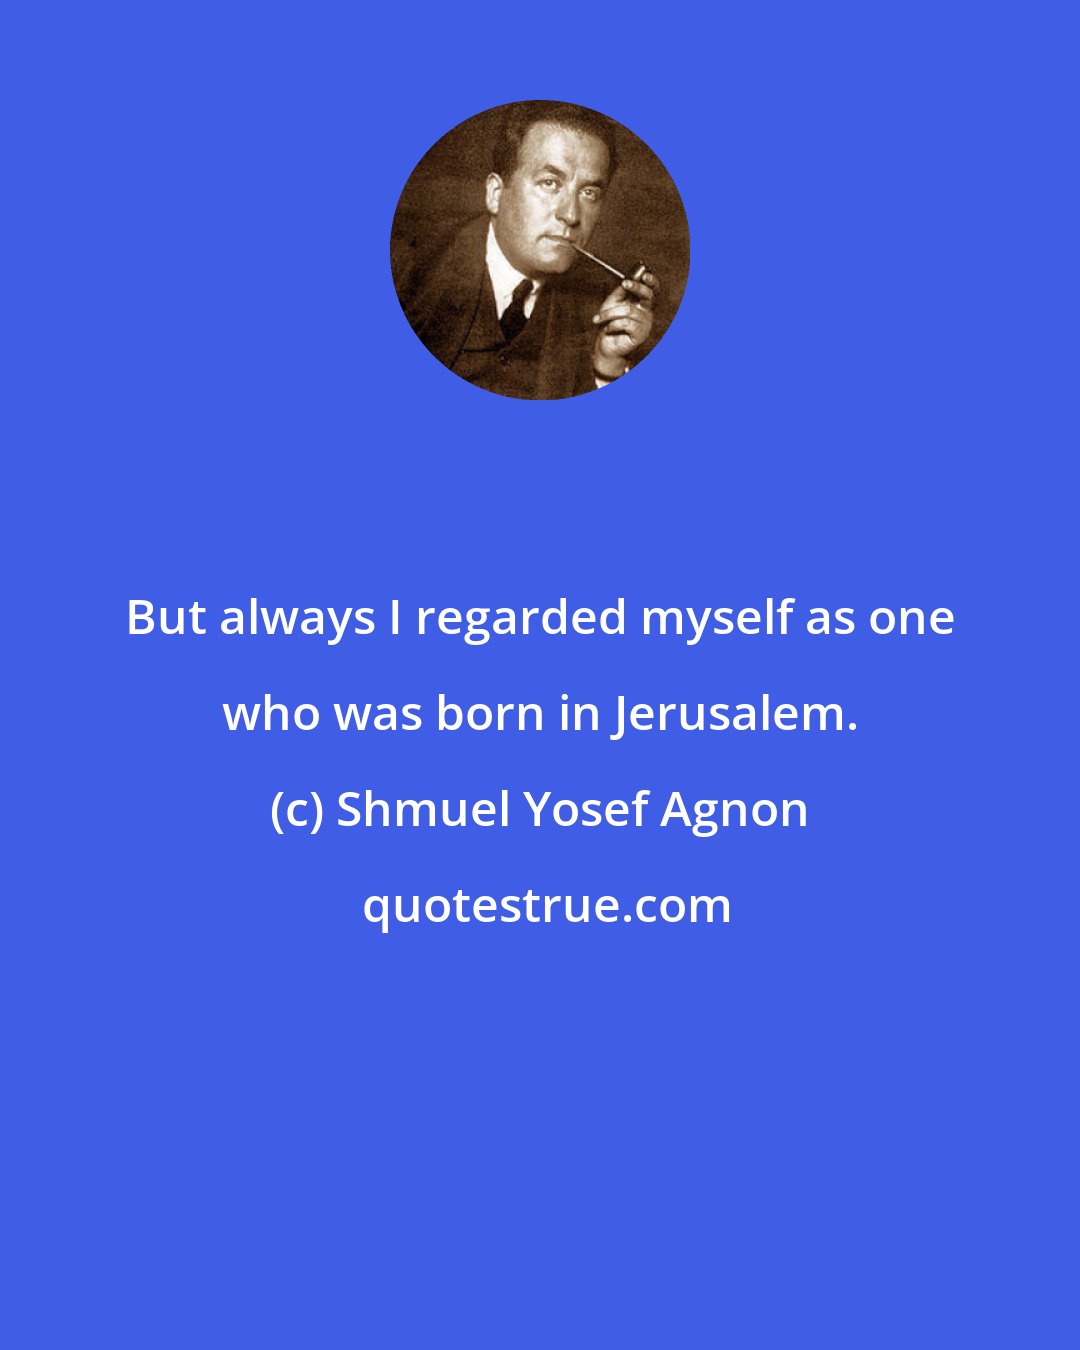 Shmuel Yosef Agnon: But always I regarded myself as one who was born in Jerusalem.